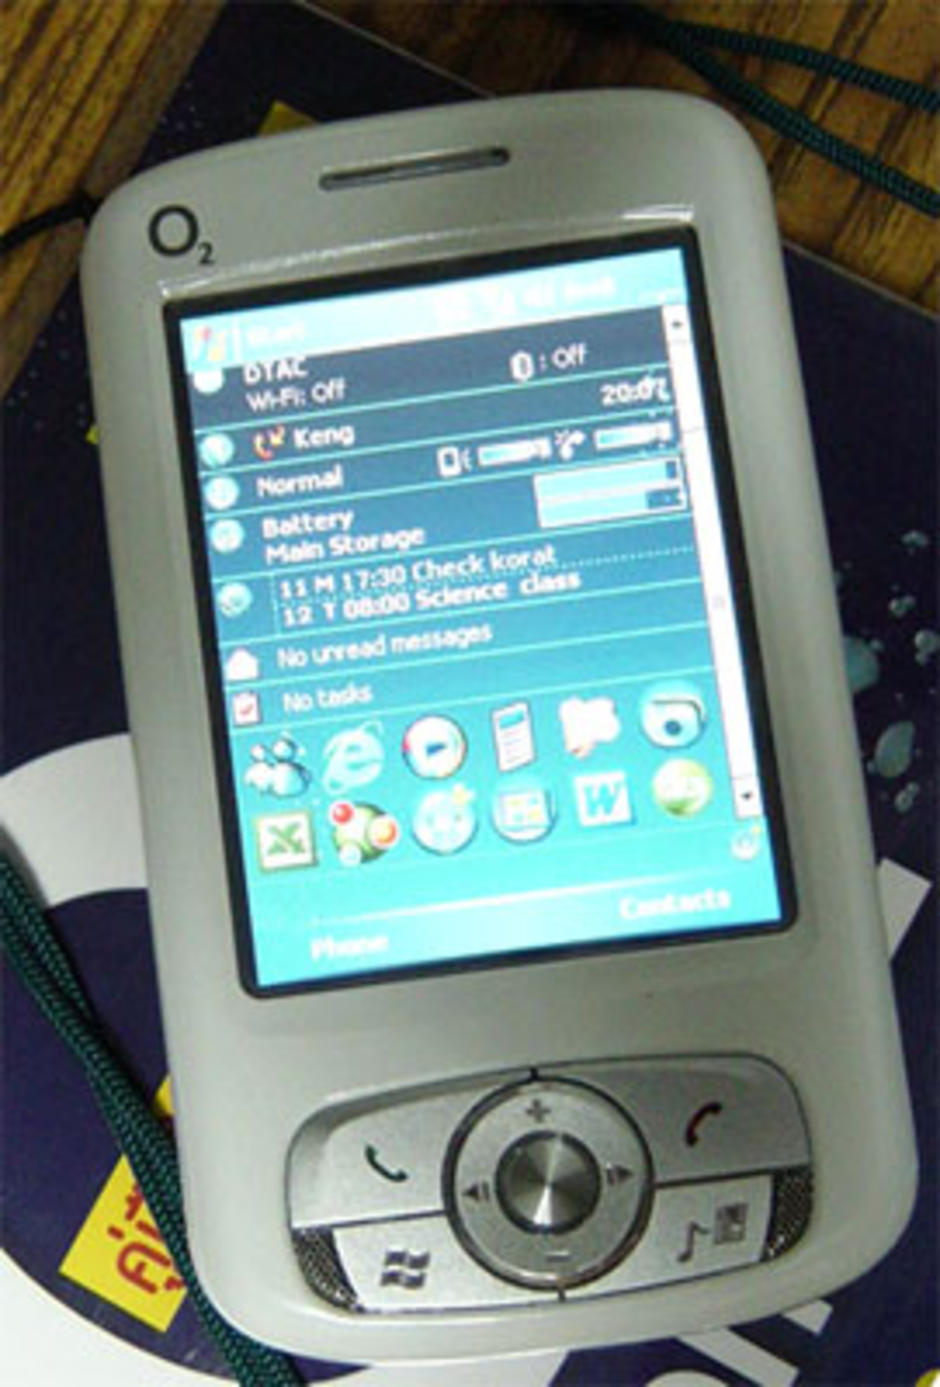 Panda first PocketPC